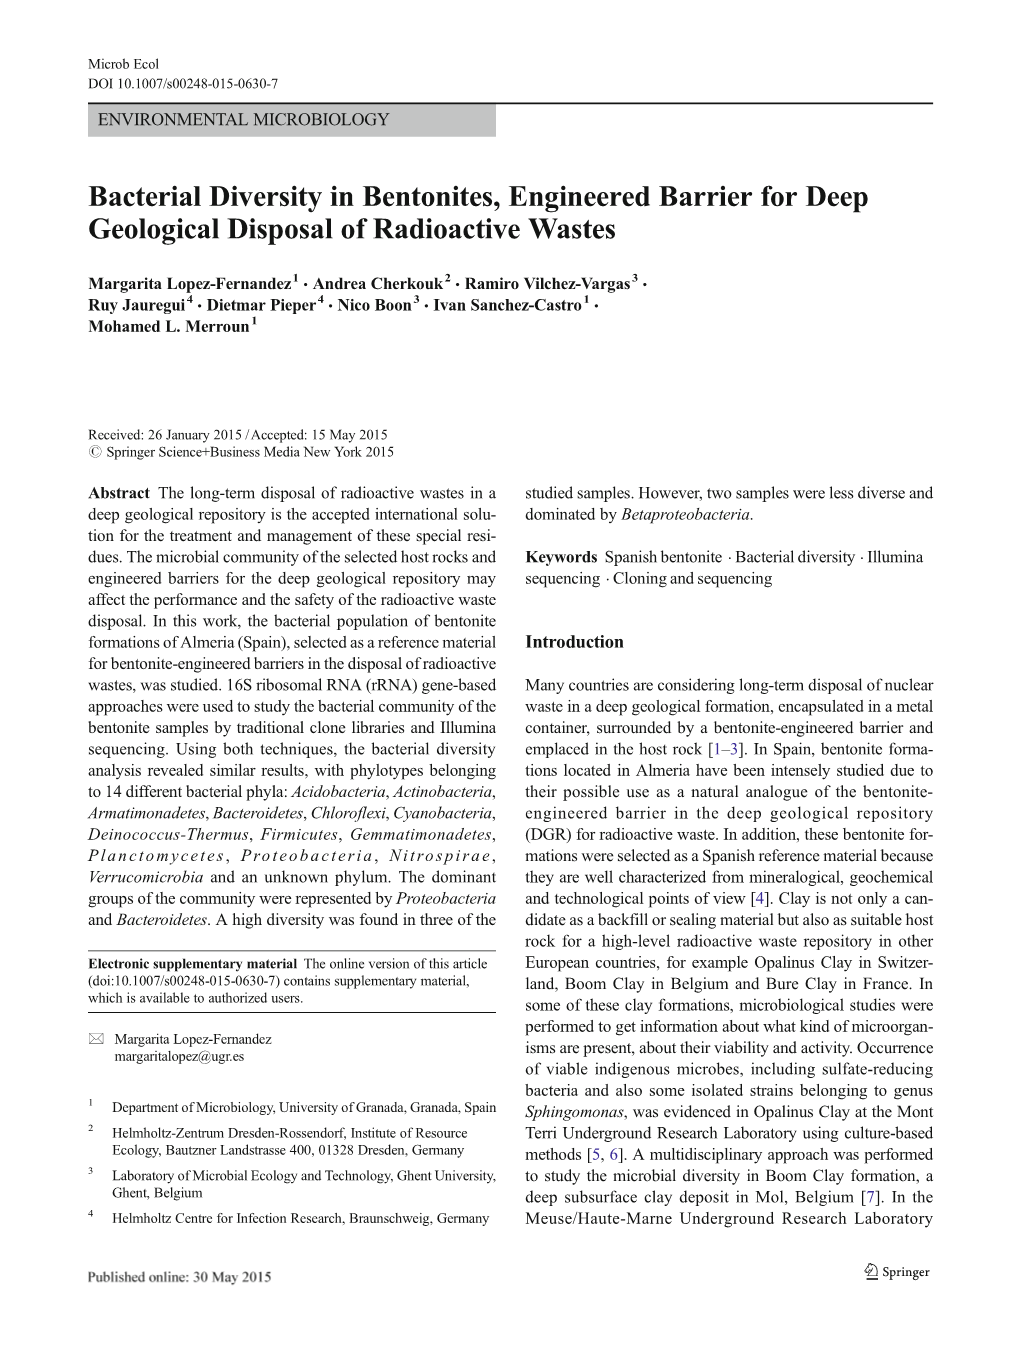 Bacterial Diversity in Bentonites, Engineered Barrier for Deep Geological Disposal of Radioactive Wastes